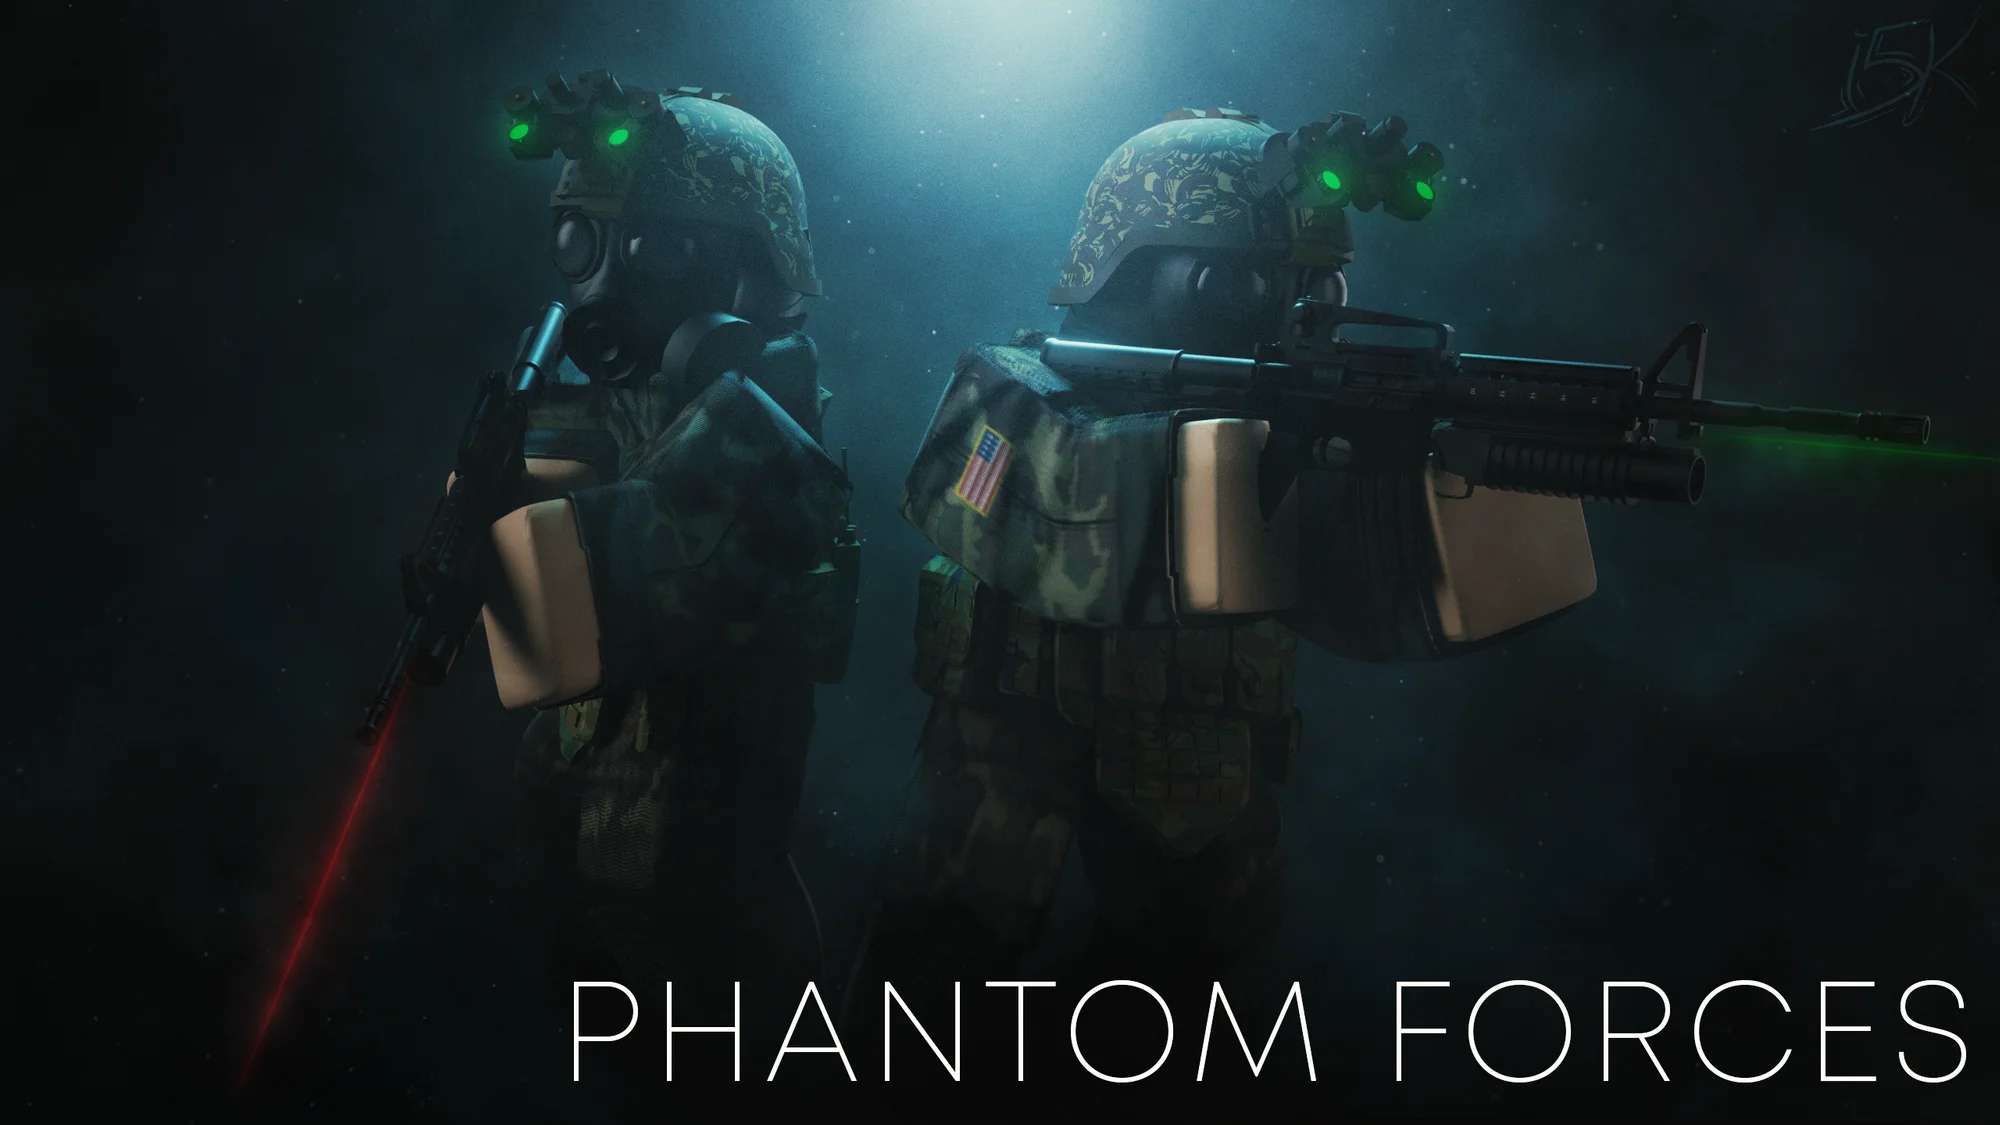 unlock all phantom forces